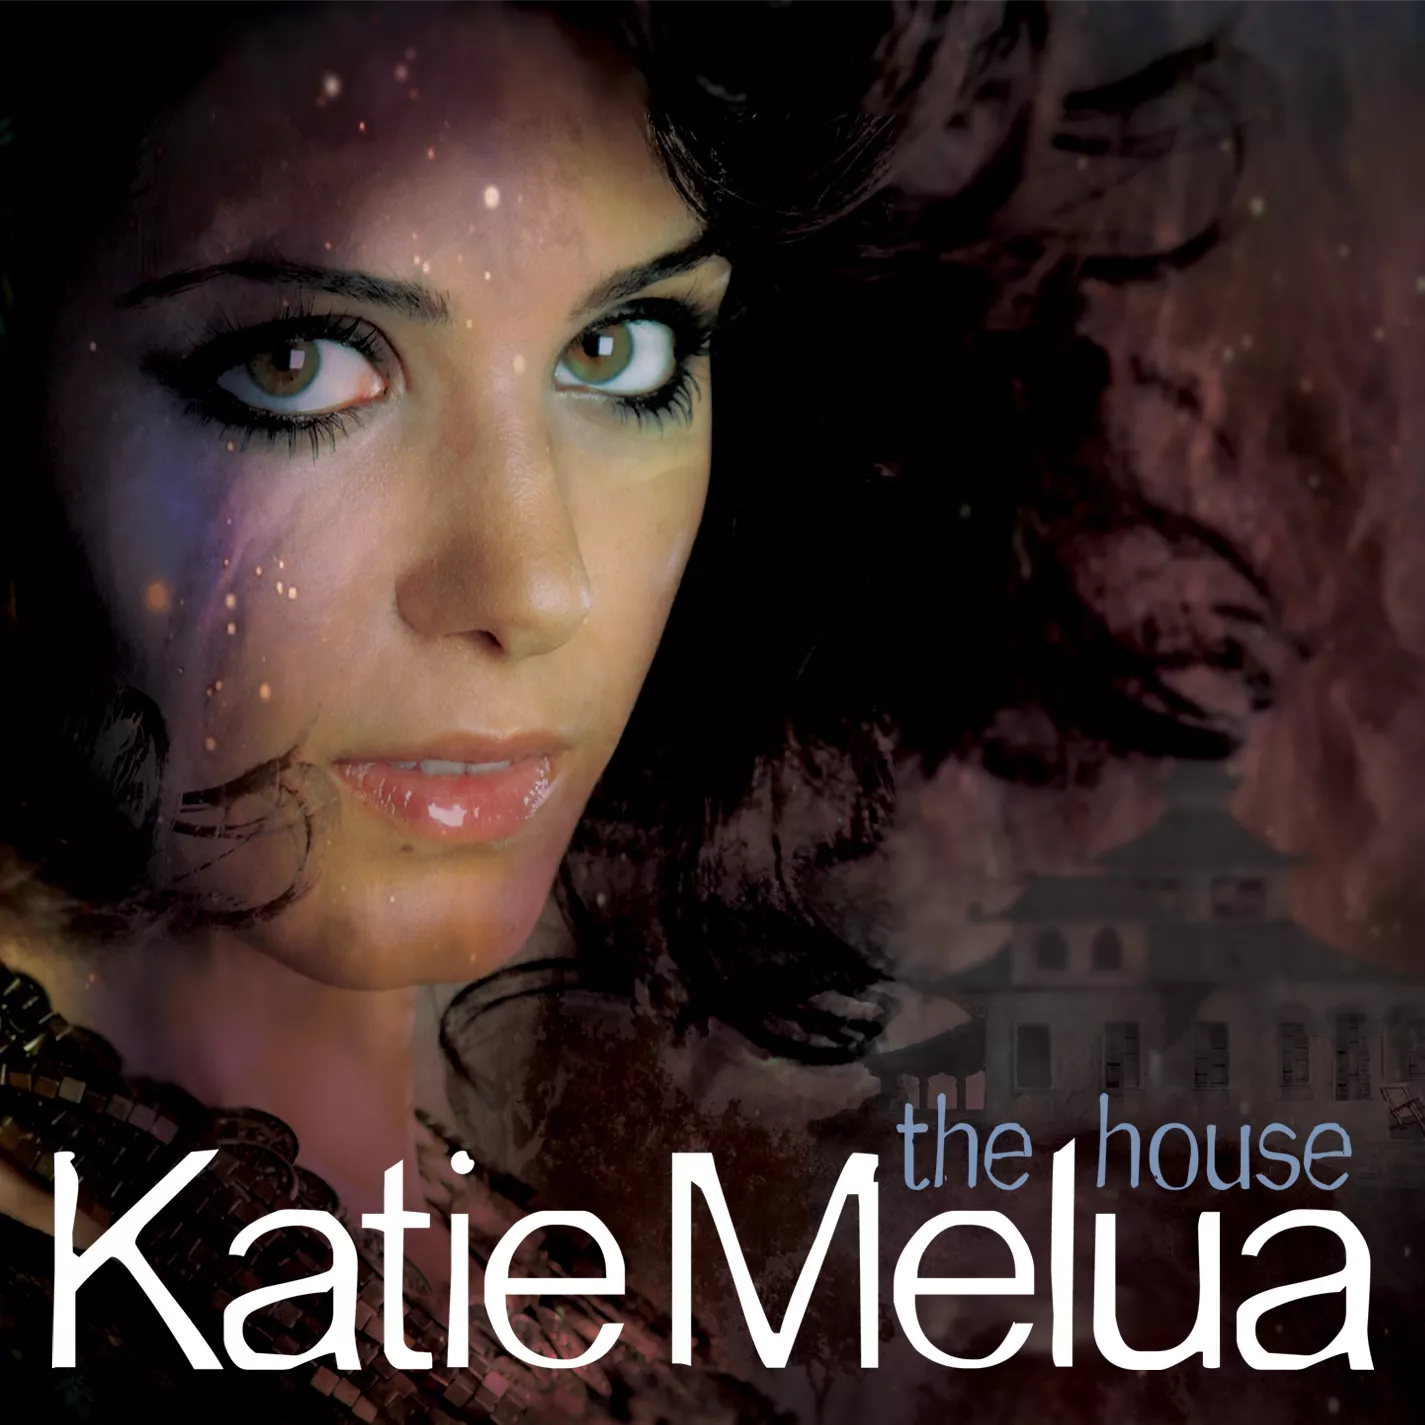 The House - Katie Melua